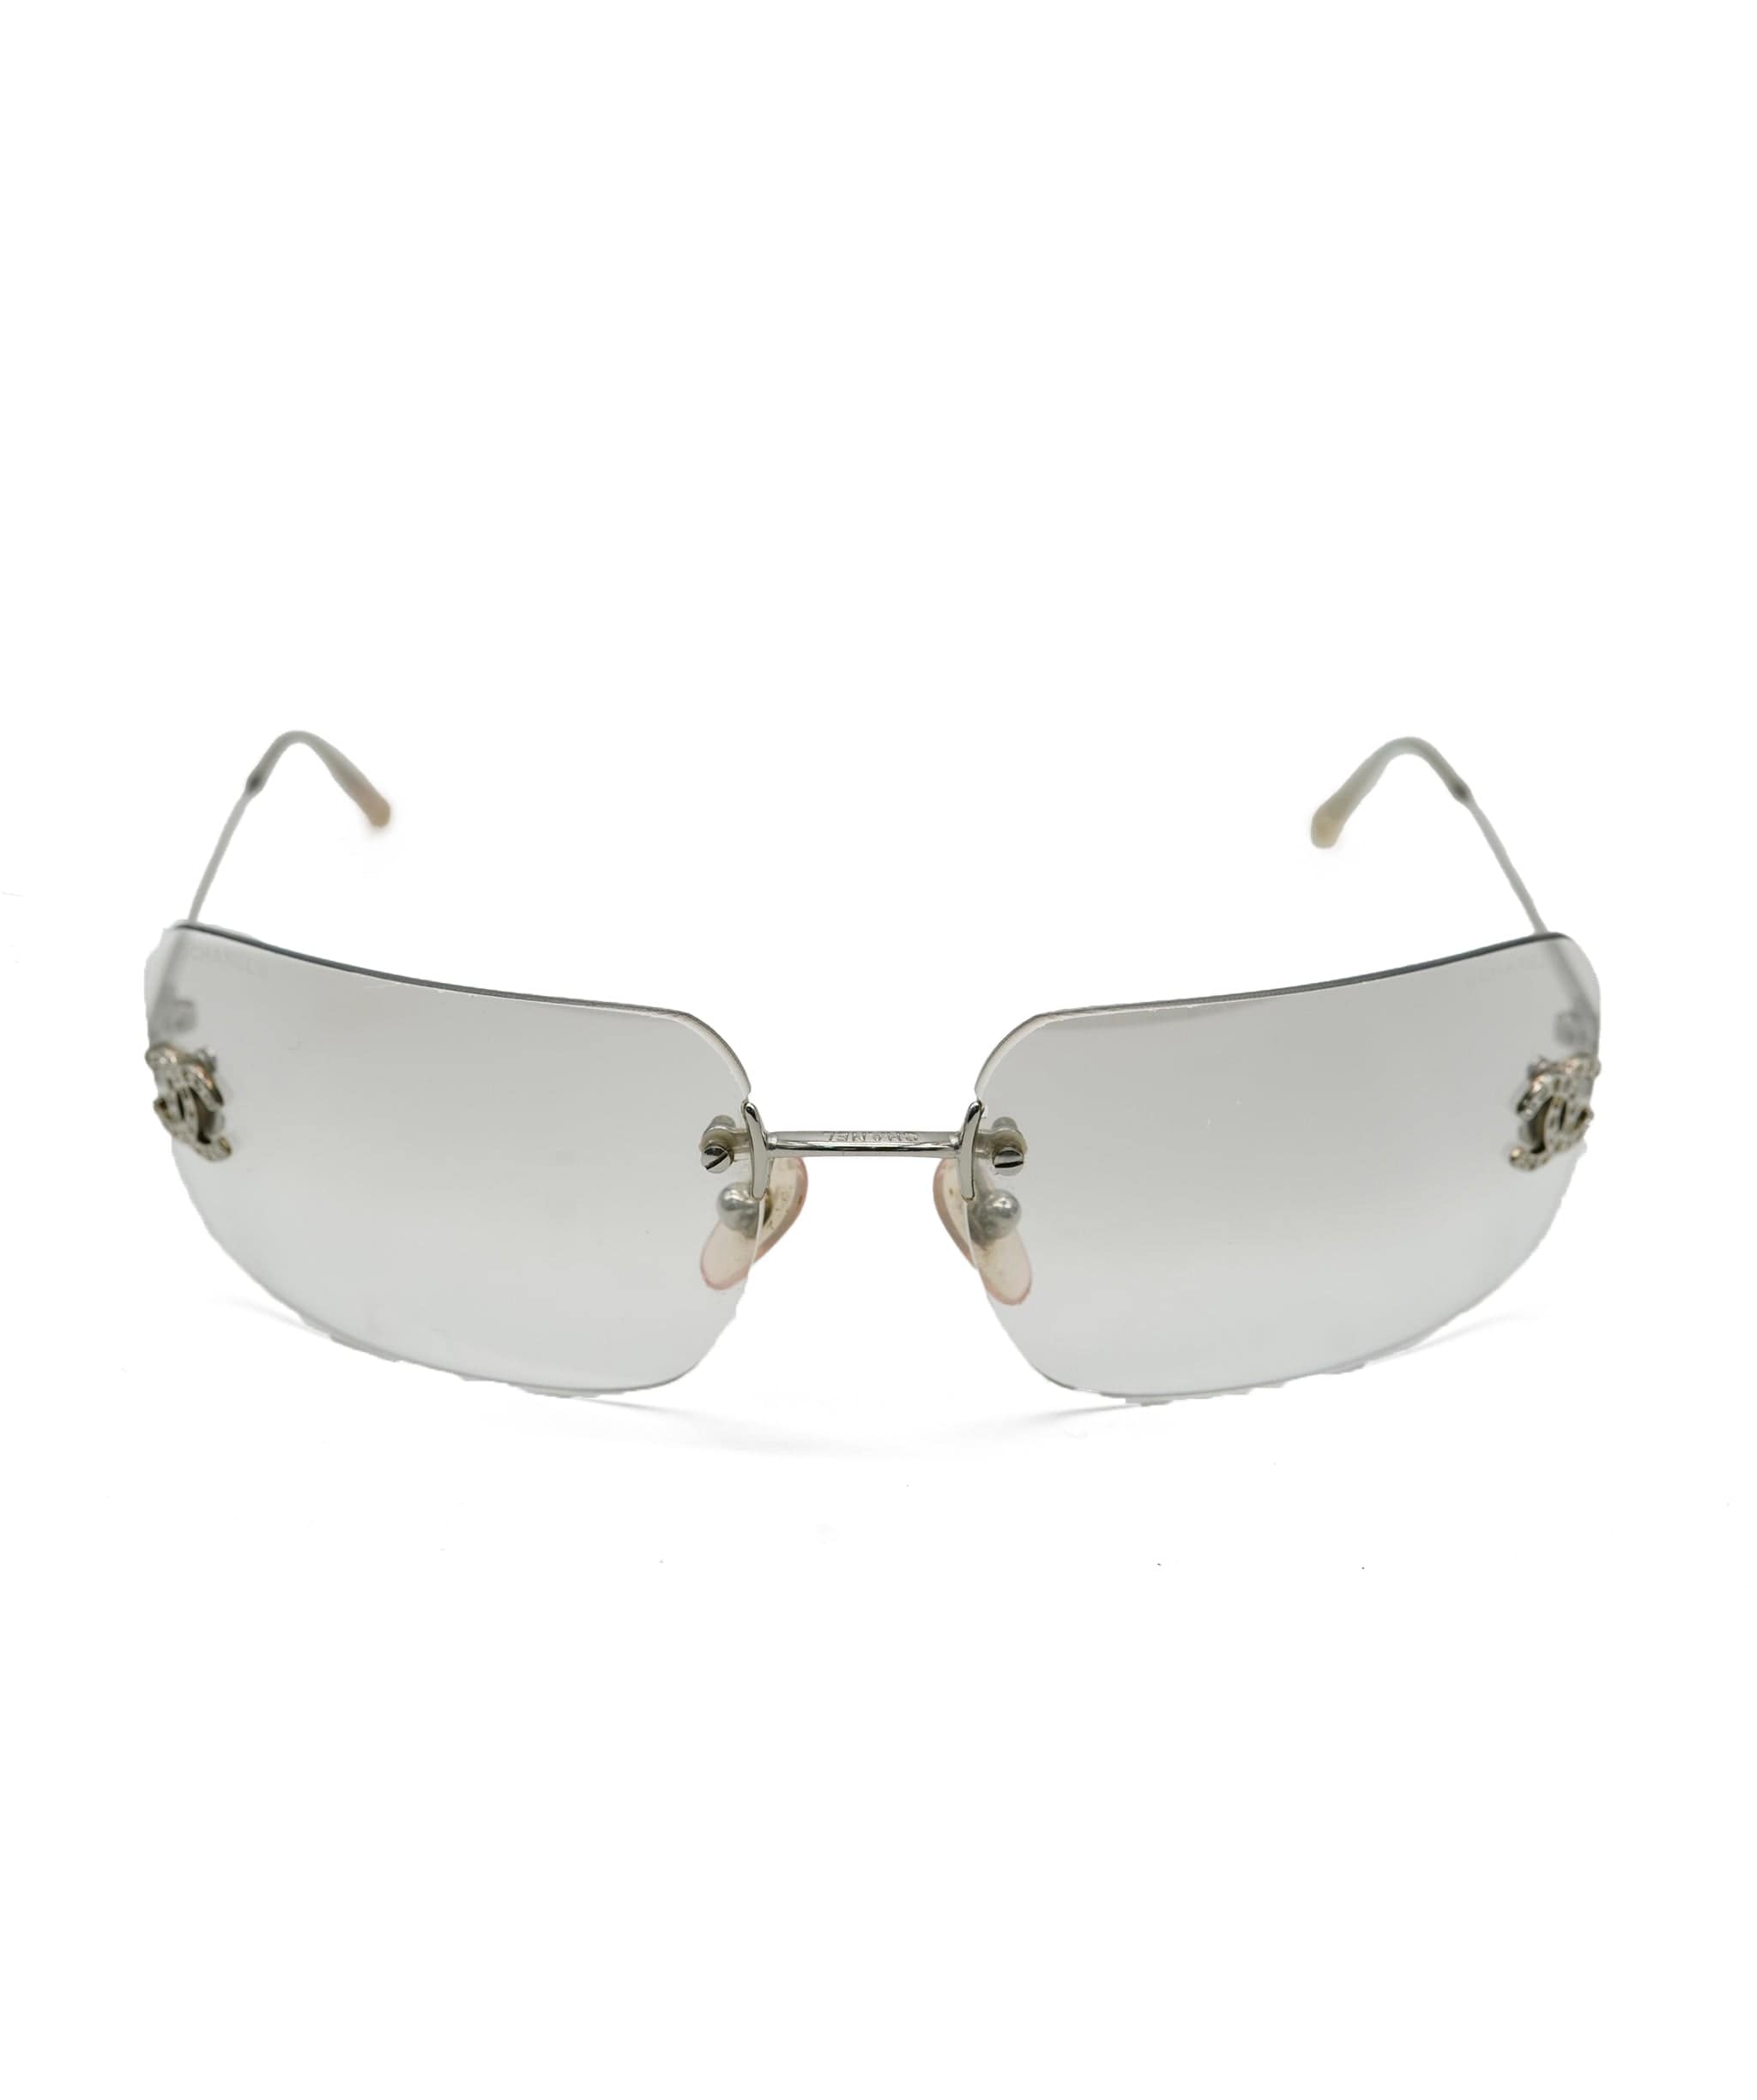 Chanel Sunglasses clear ASL6401